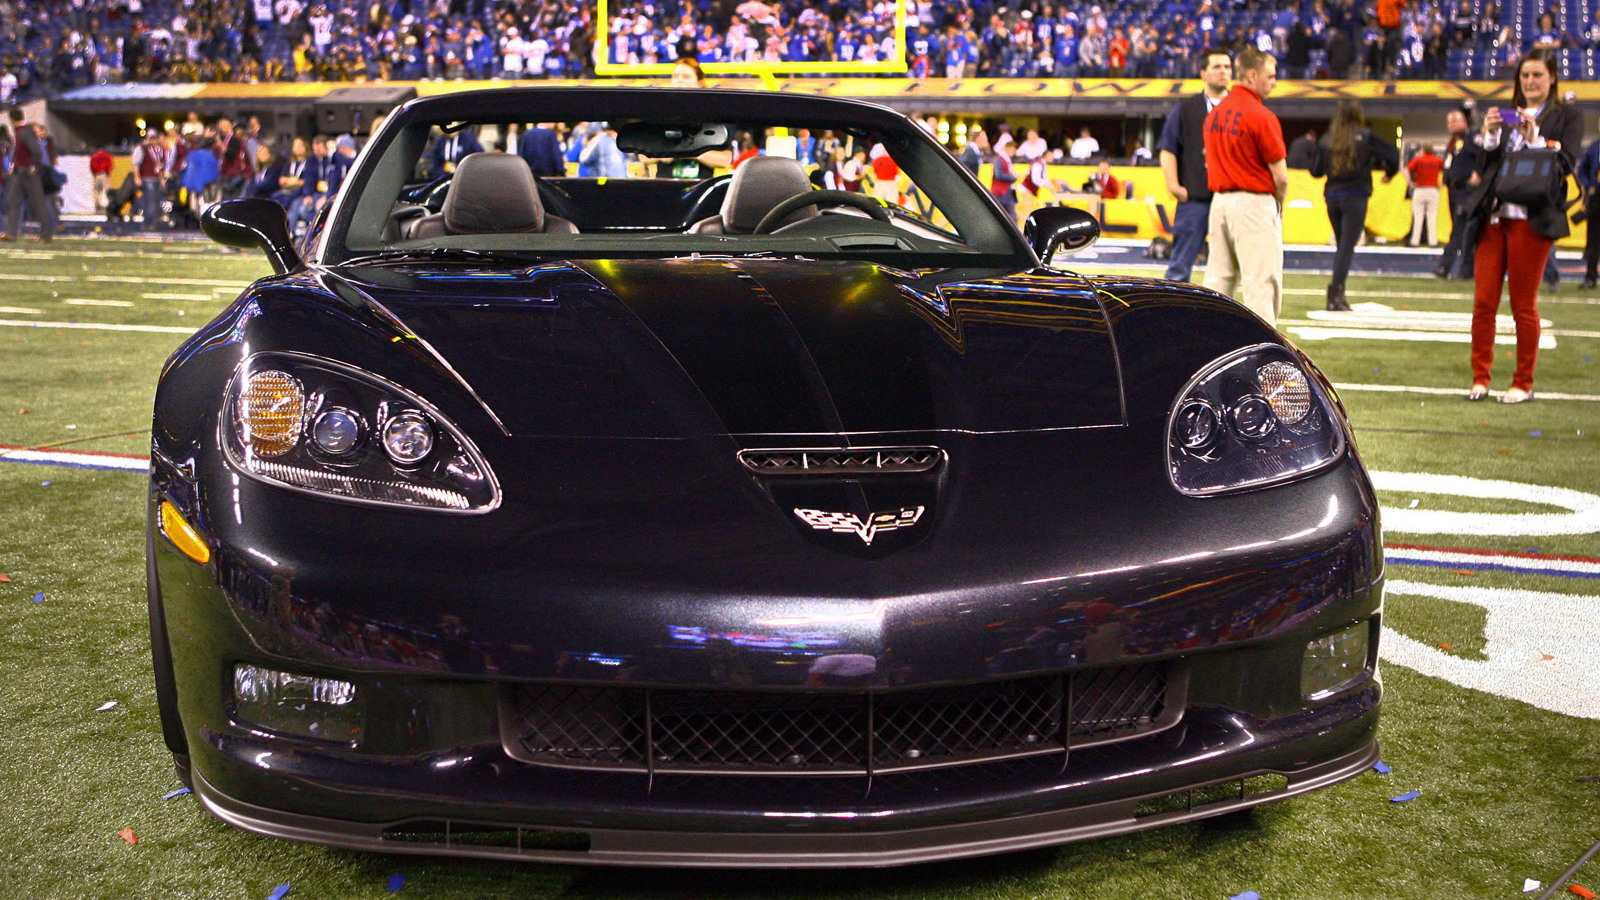 Super Bowl XLVI MVP Eli Manning presented with 2012 Chevy Corvette